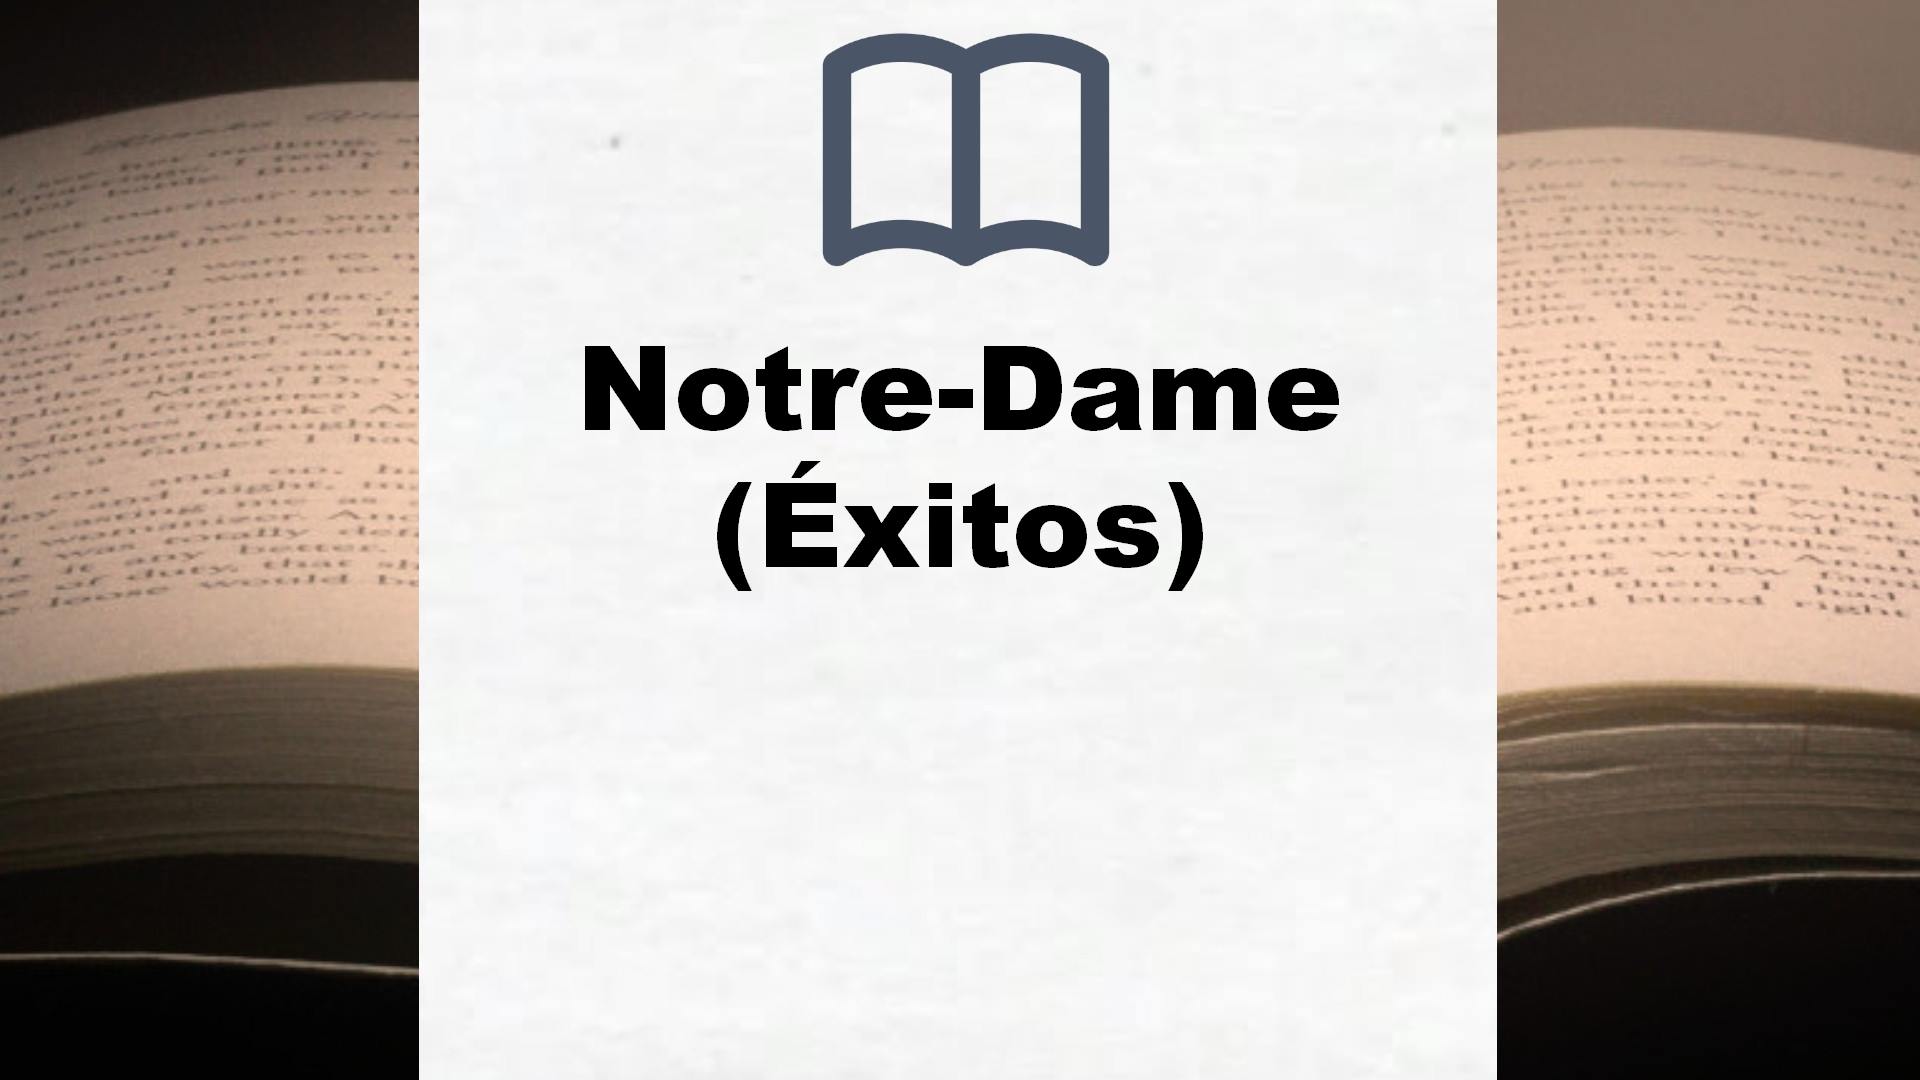 Notre-Dame (Éxitos) – Reseña del libro